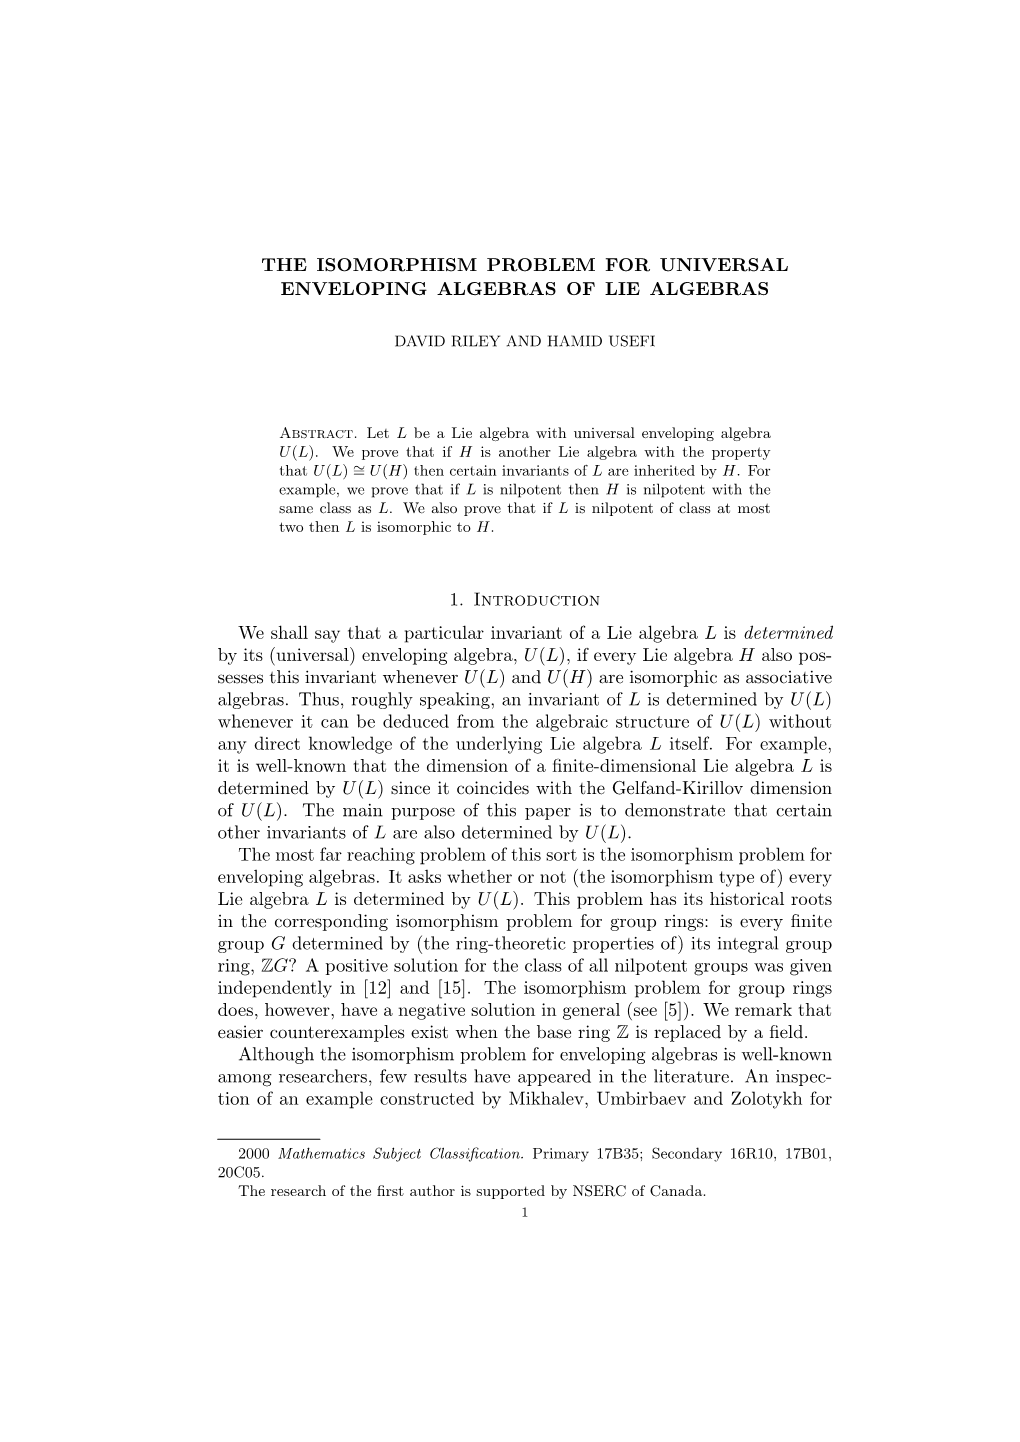 The Isomorphism Problem for Universal Enveloping Algebras of Lie Algebras